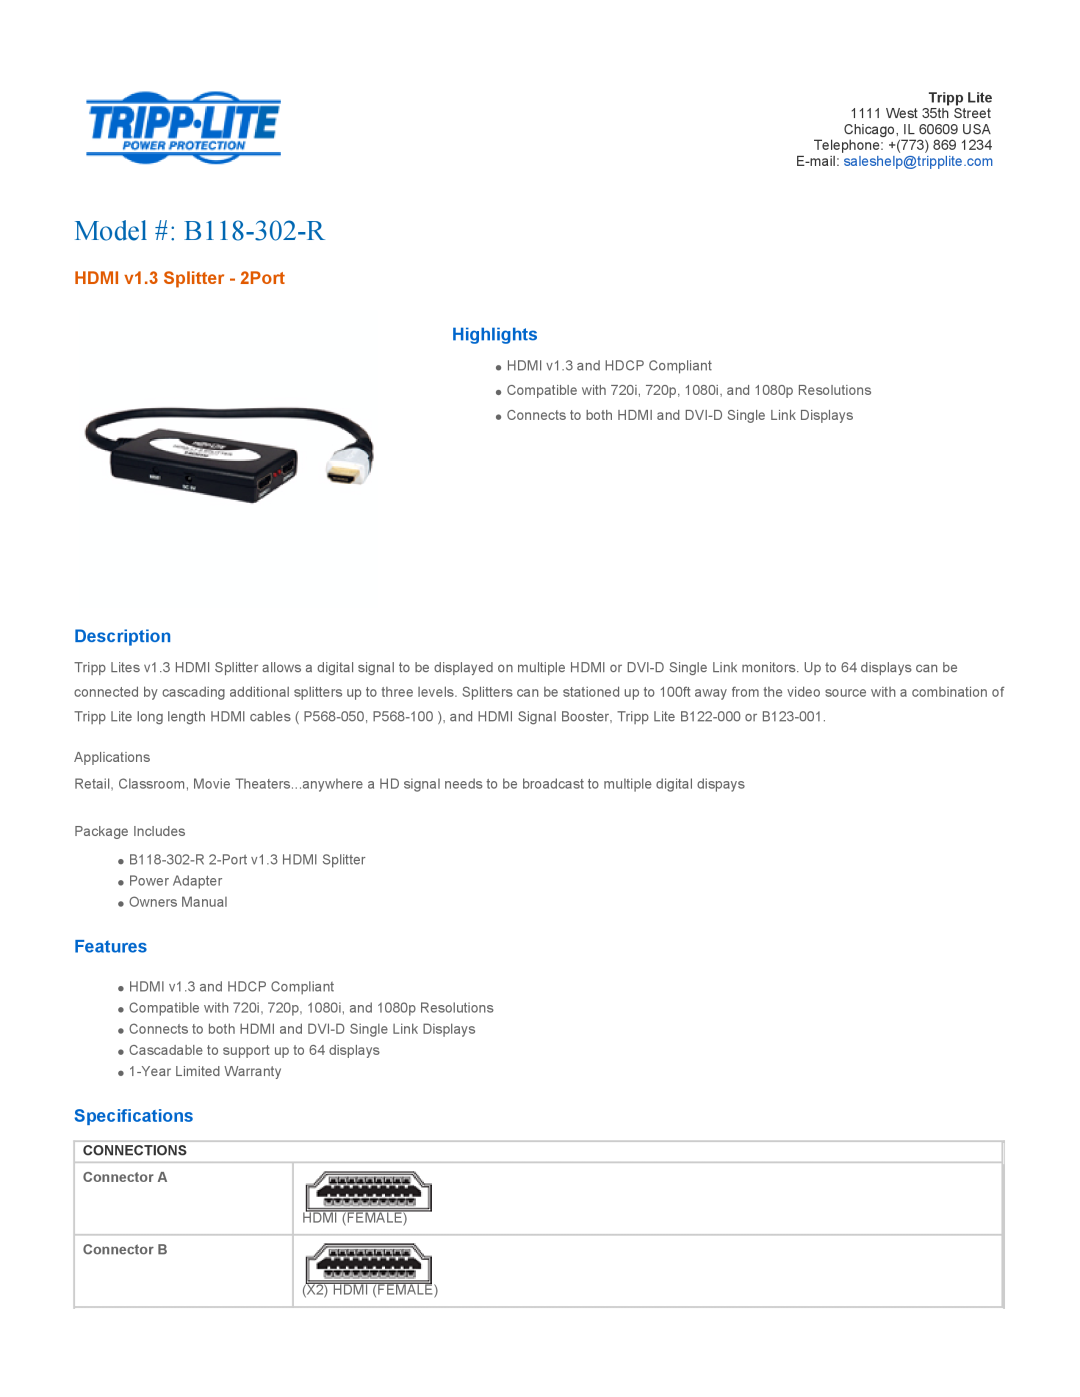 Tripp Lite specifications Connector A, Connector B, Model # B118-302-R, HDMI v1.3 Splitter - 2Port, Highlights 